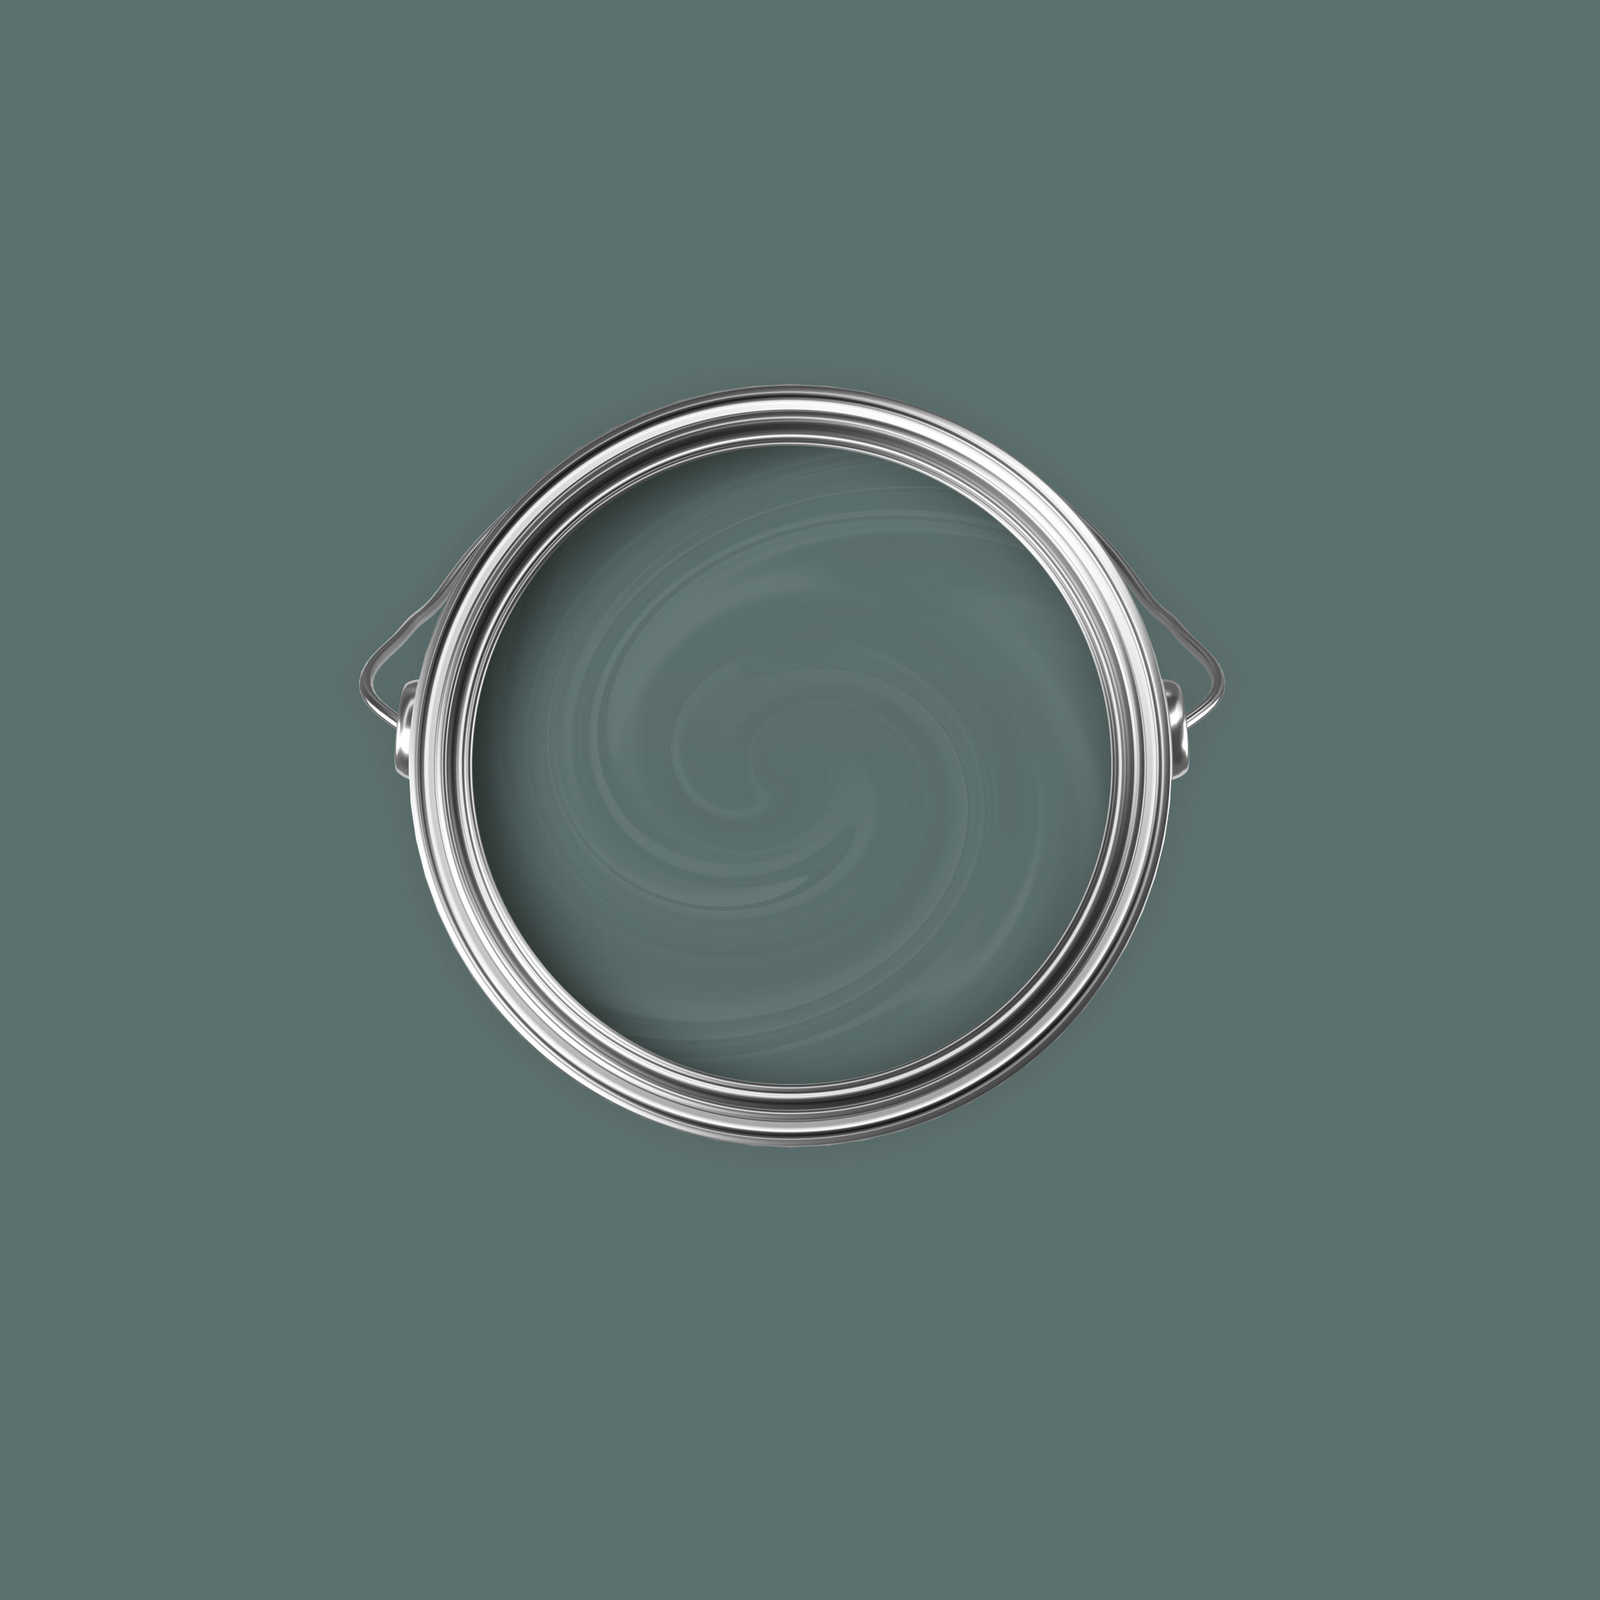             Premium Muurverf Relaxing Grey Green »Sweet Sage« NW405 – 2,5 liter
        